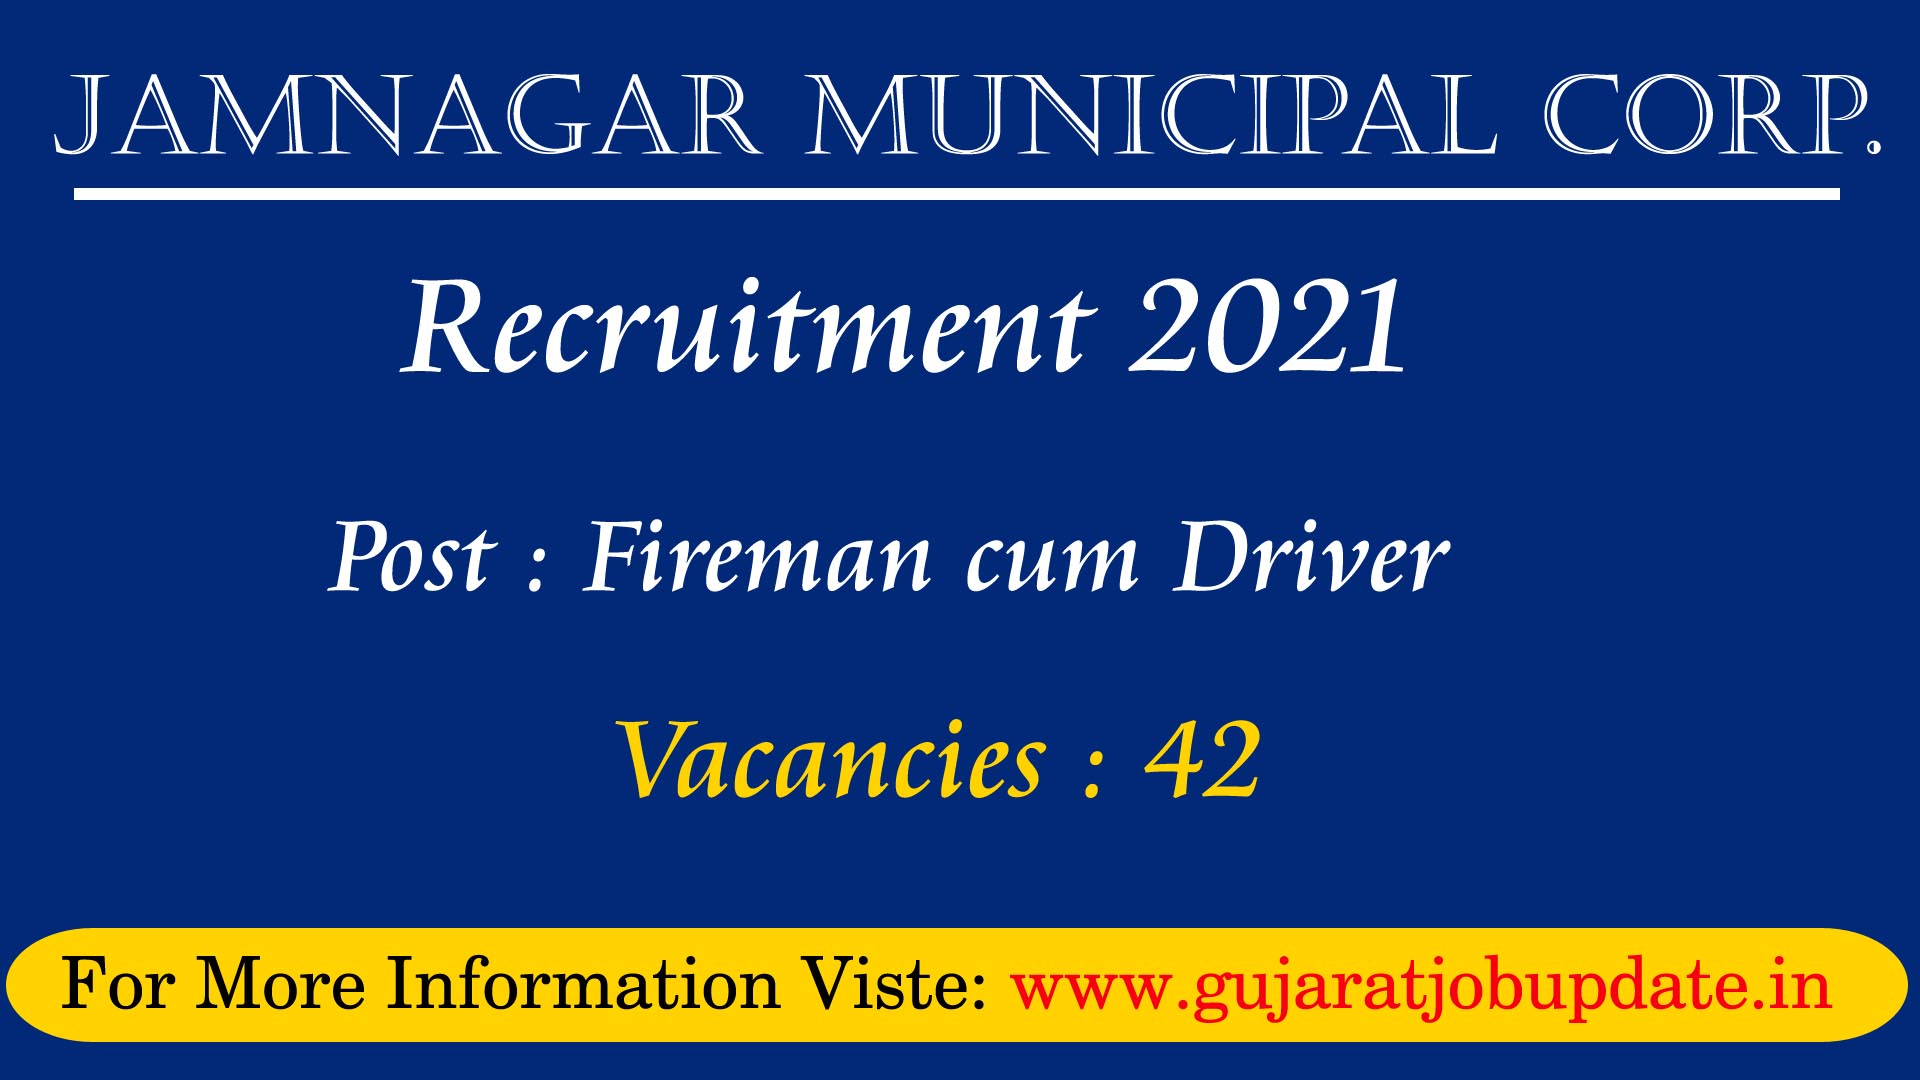 Jamnagar Municipal Corporation (JMC) Recruitment for 42 Fireman cum Driver Posts 2021 (Ojas)